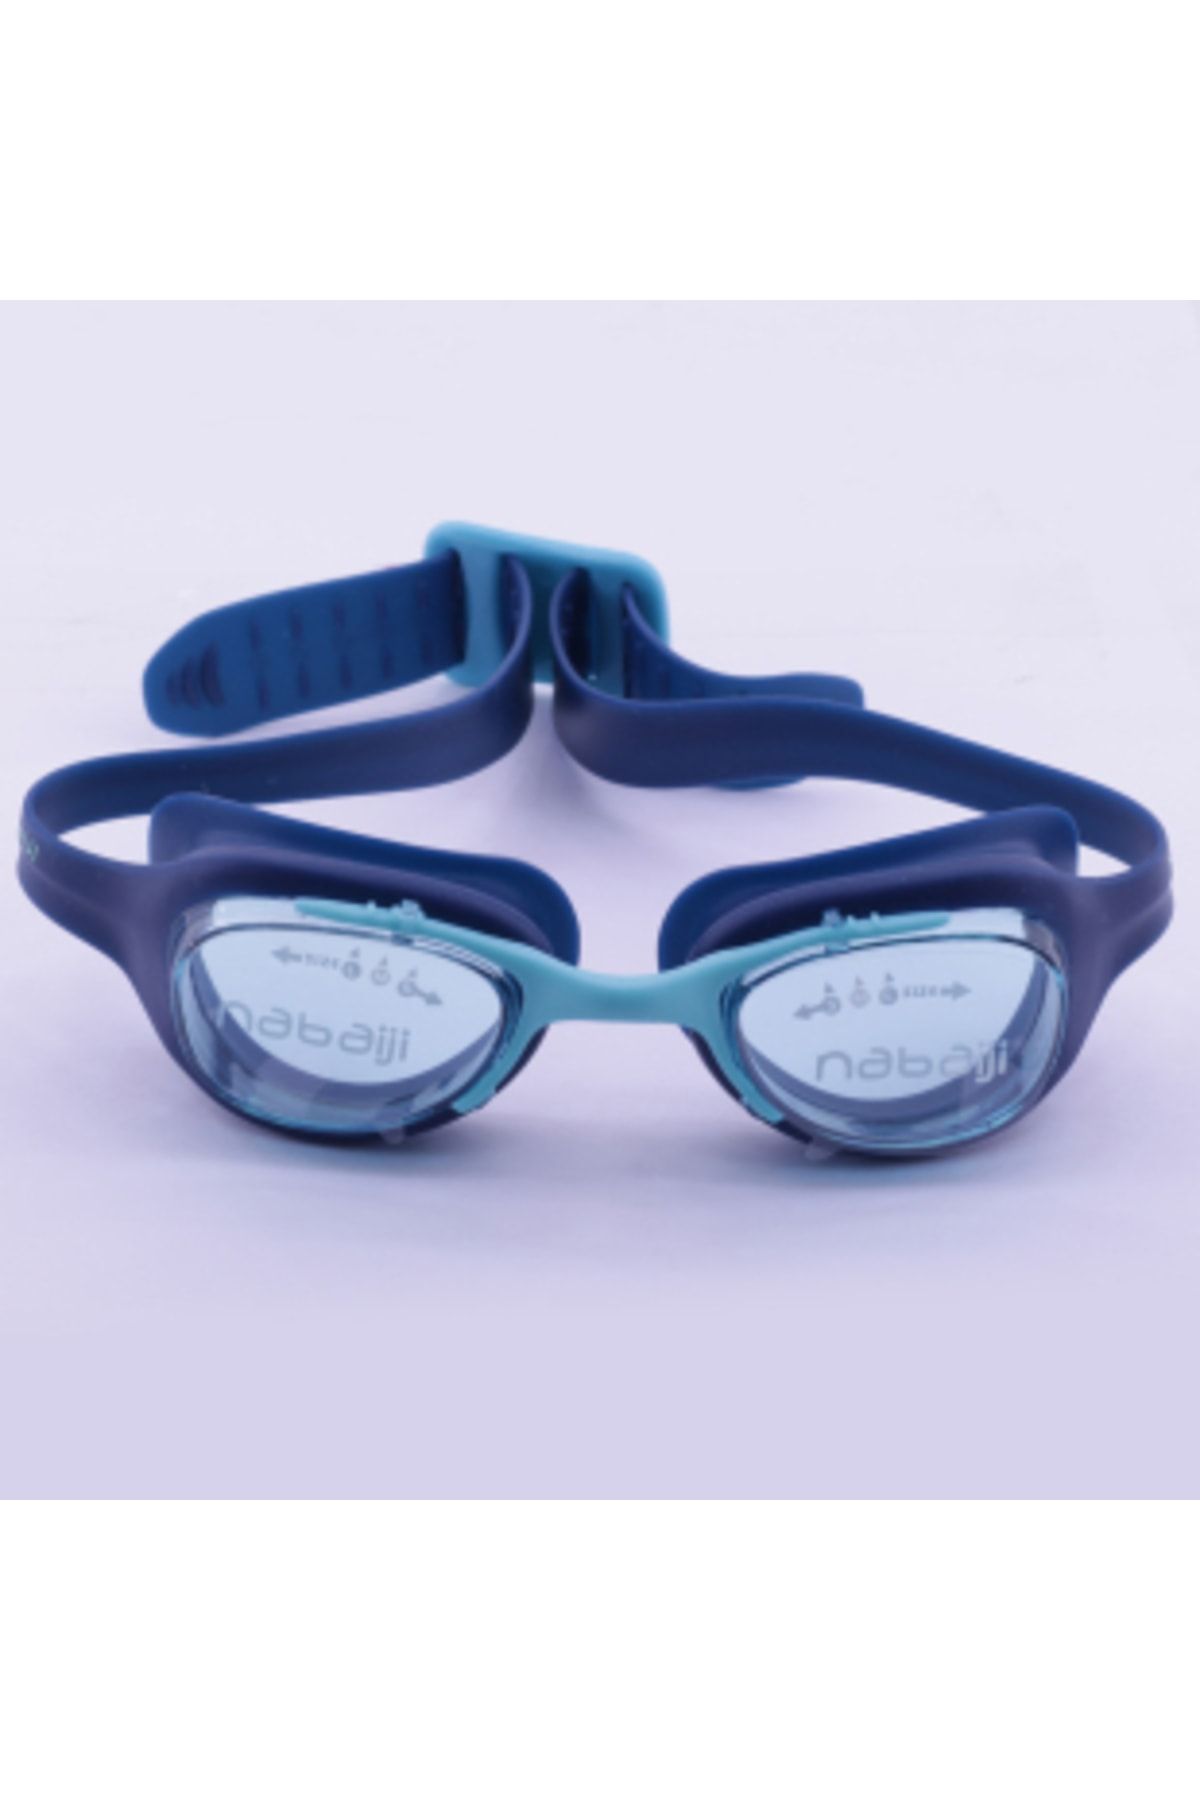 Nabaiji - Yüzücü Gözlüğü Mavi